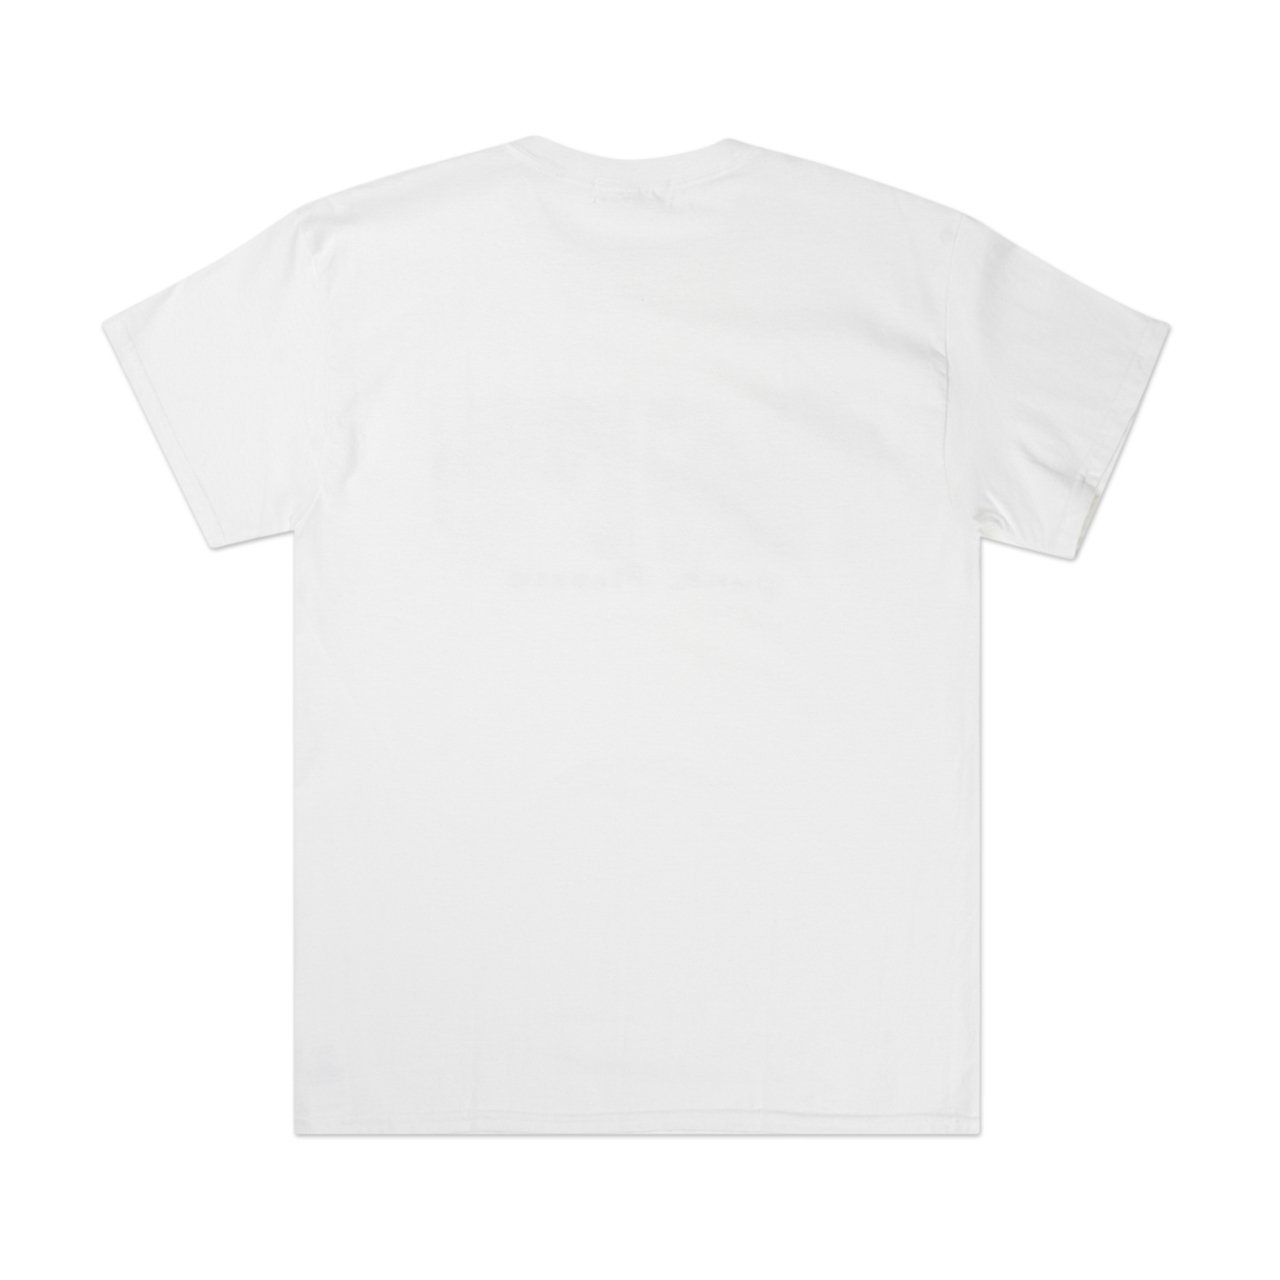 flagstuff x larry clark t-shirt (white) - 19aw-fsxlc-07-wht - a.plus - Image - 2